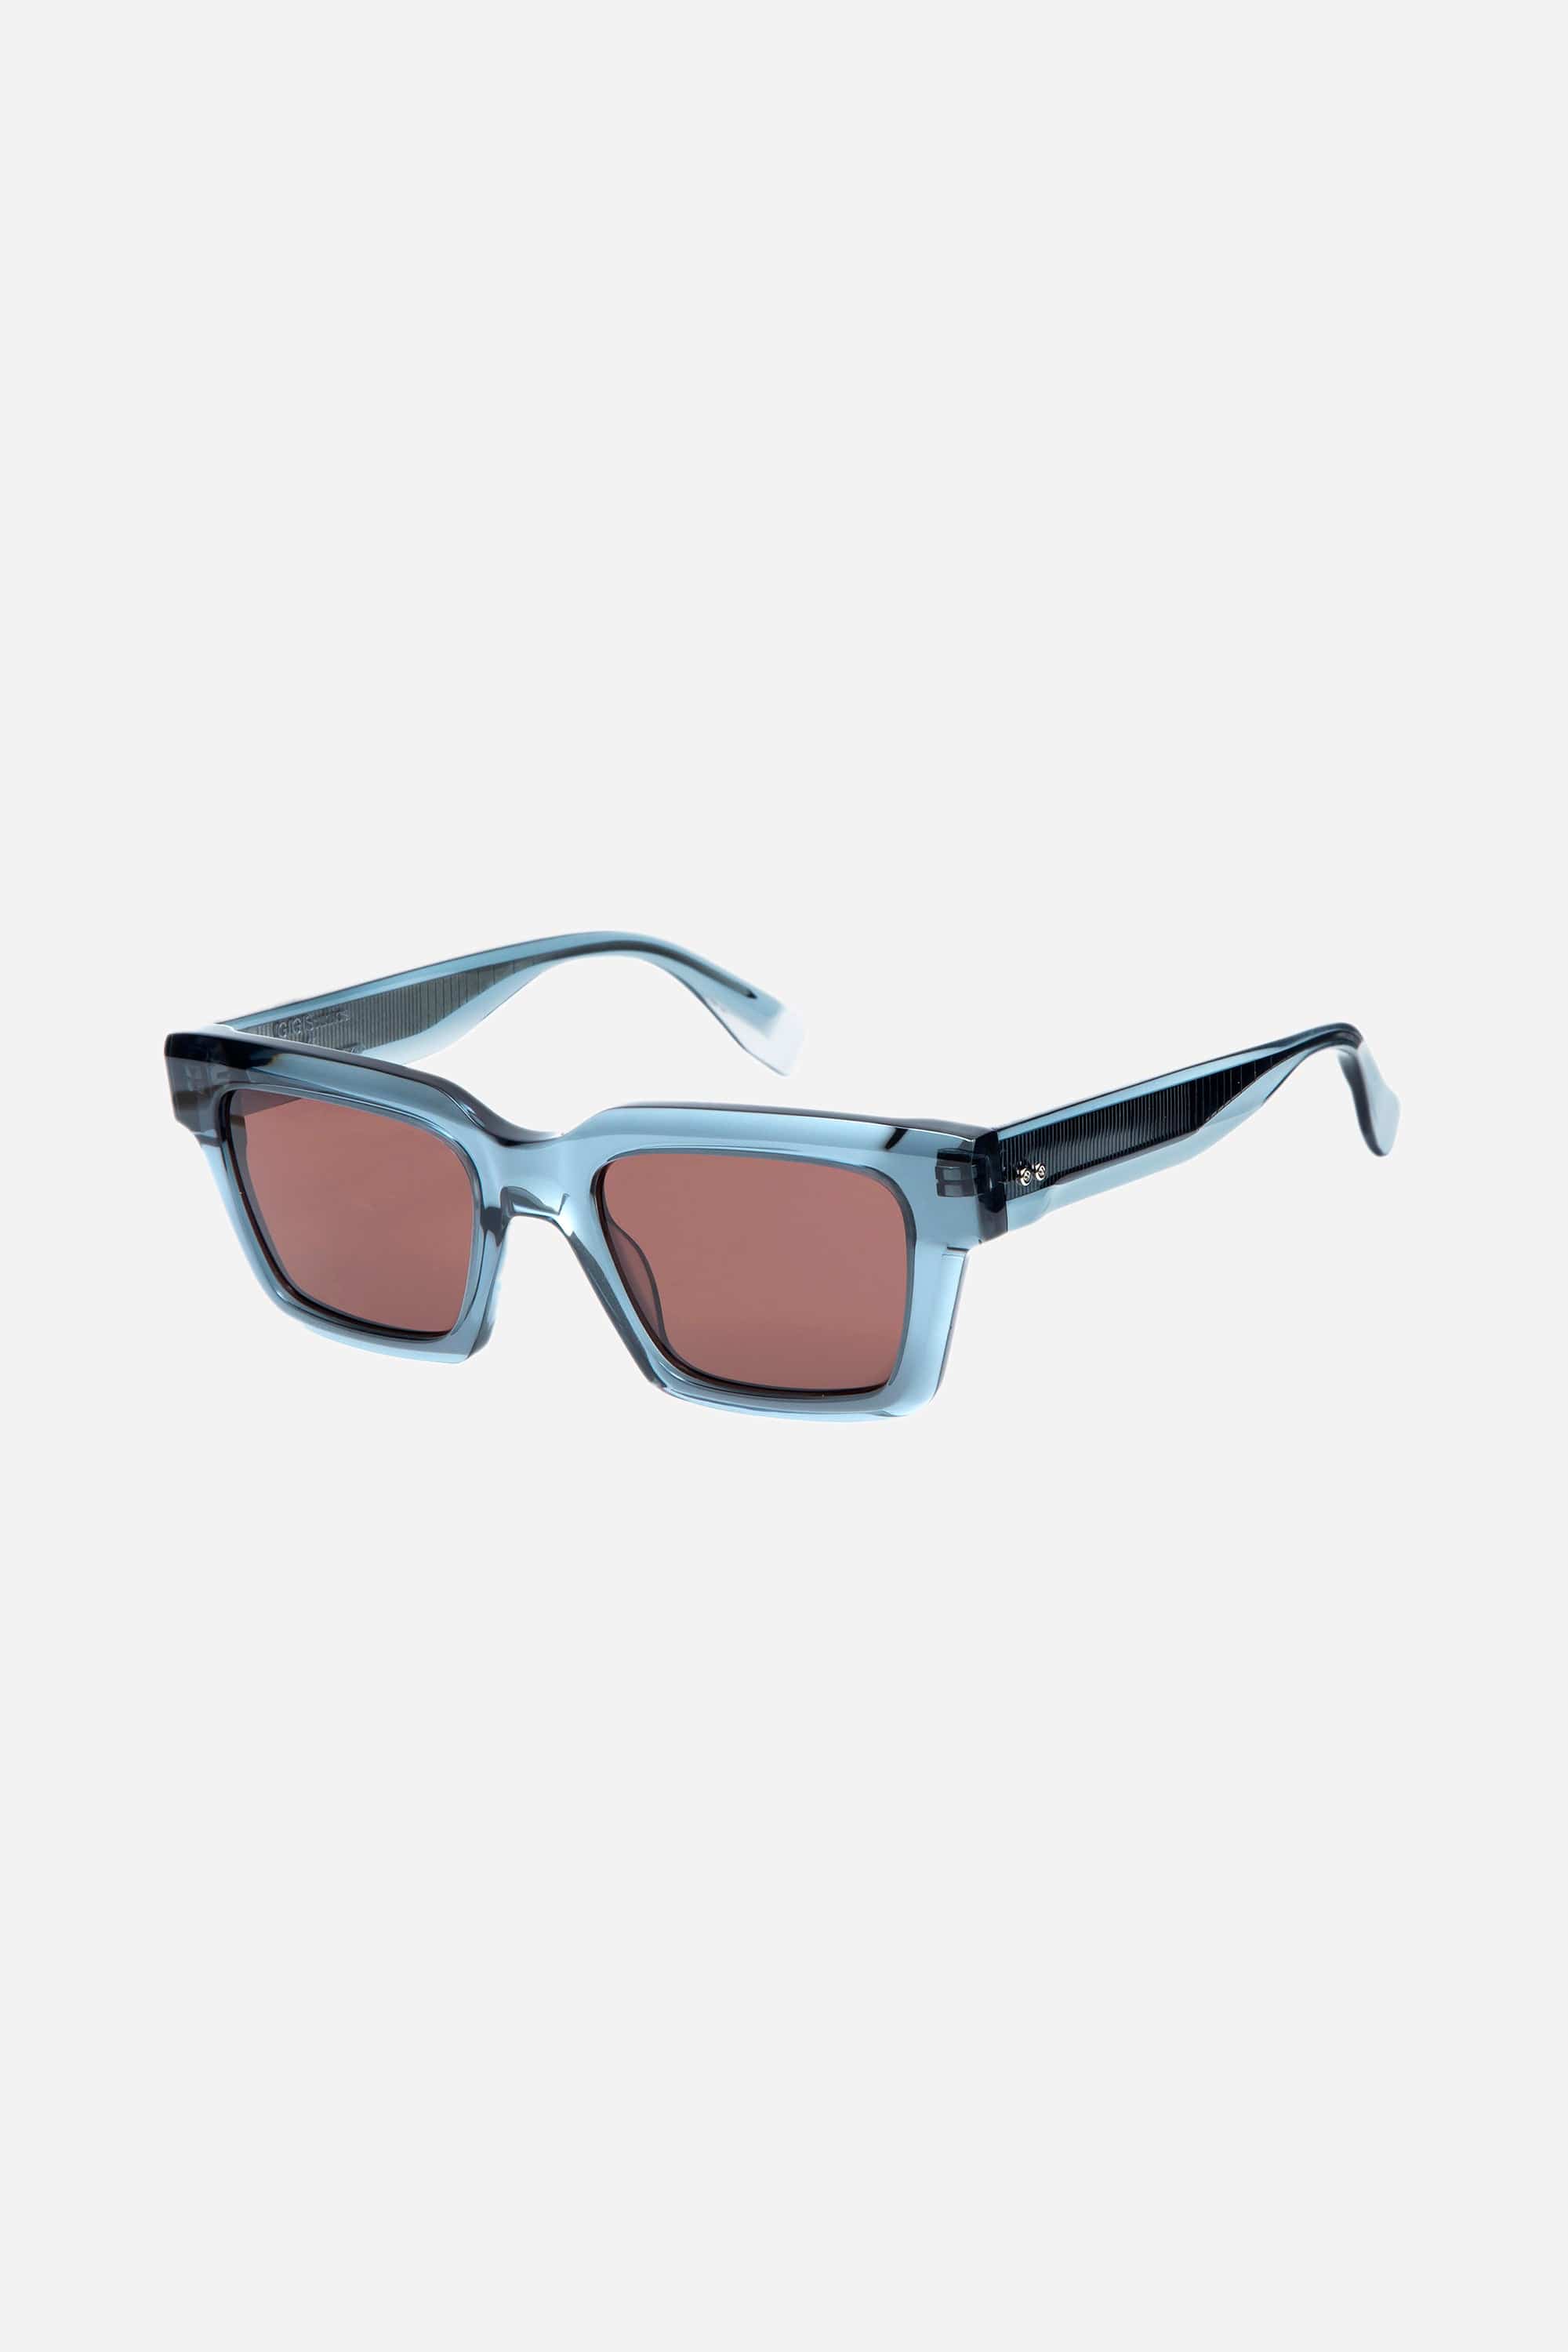 Gigi Studios squared blue sunglasses - Eyewear Club